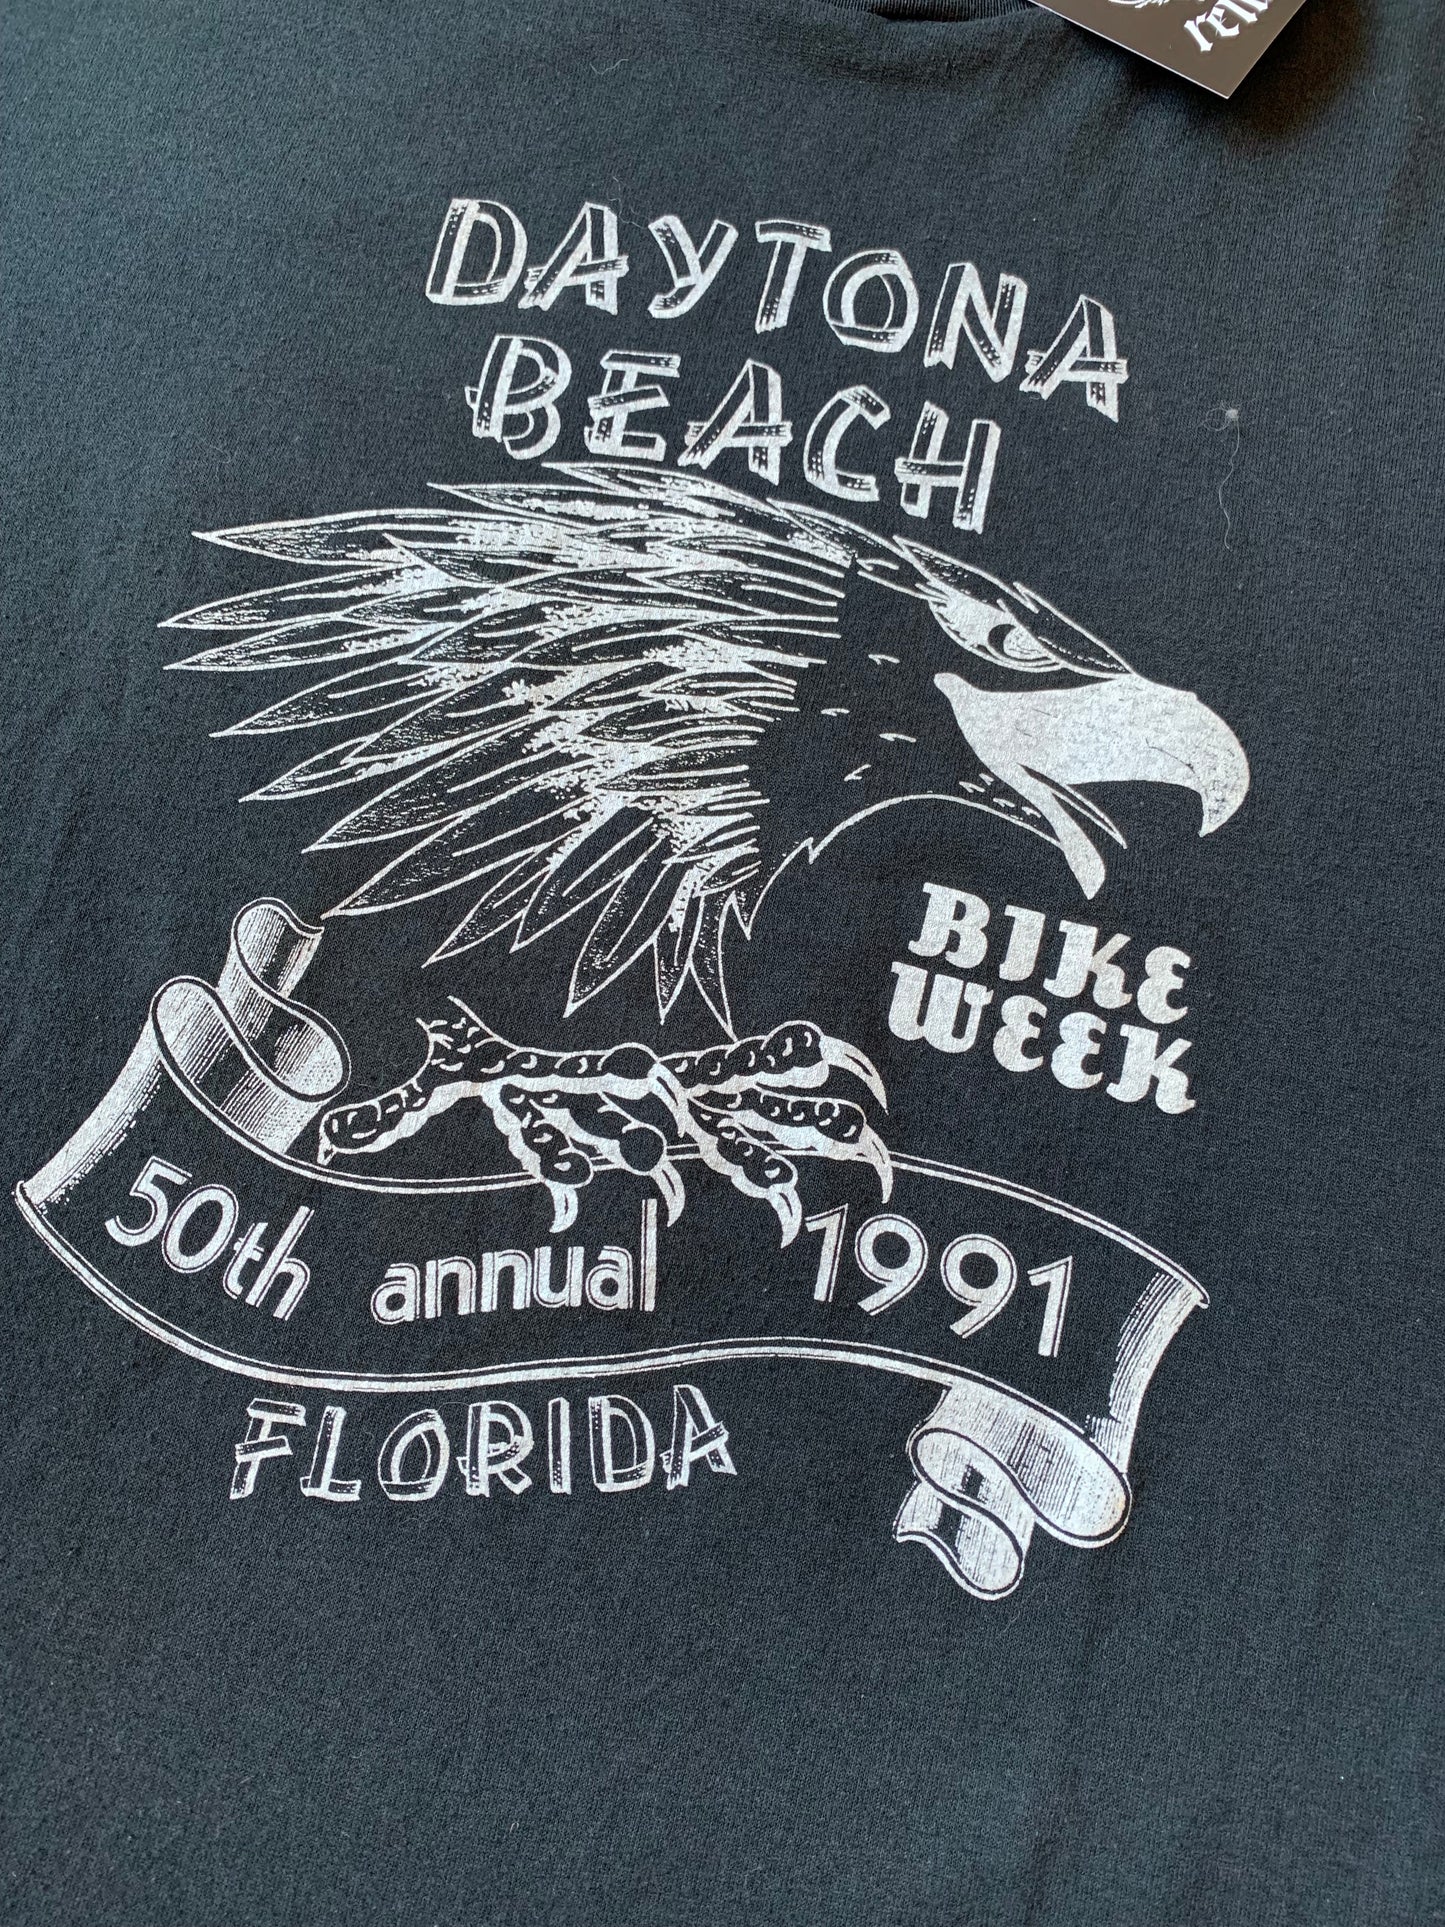 Vintage 1991 Daytona Beach 50th Annual Bike Week Tee